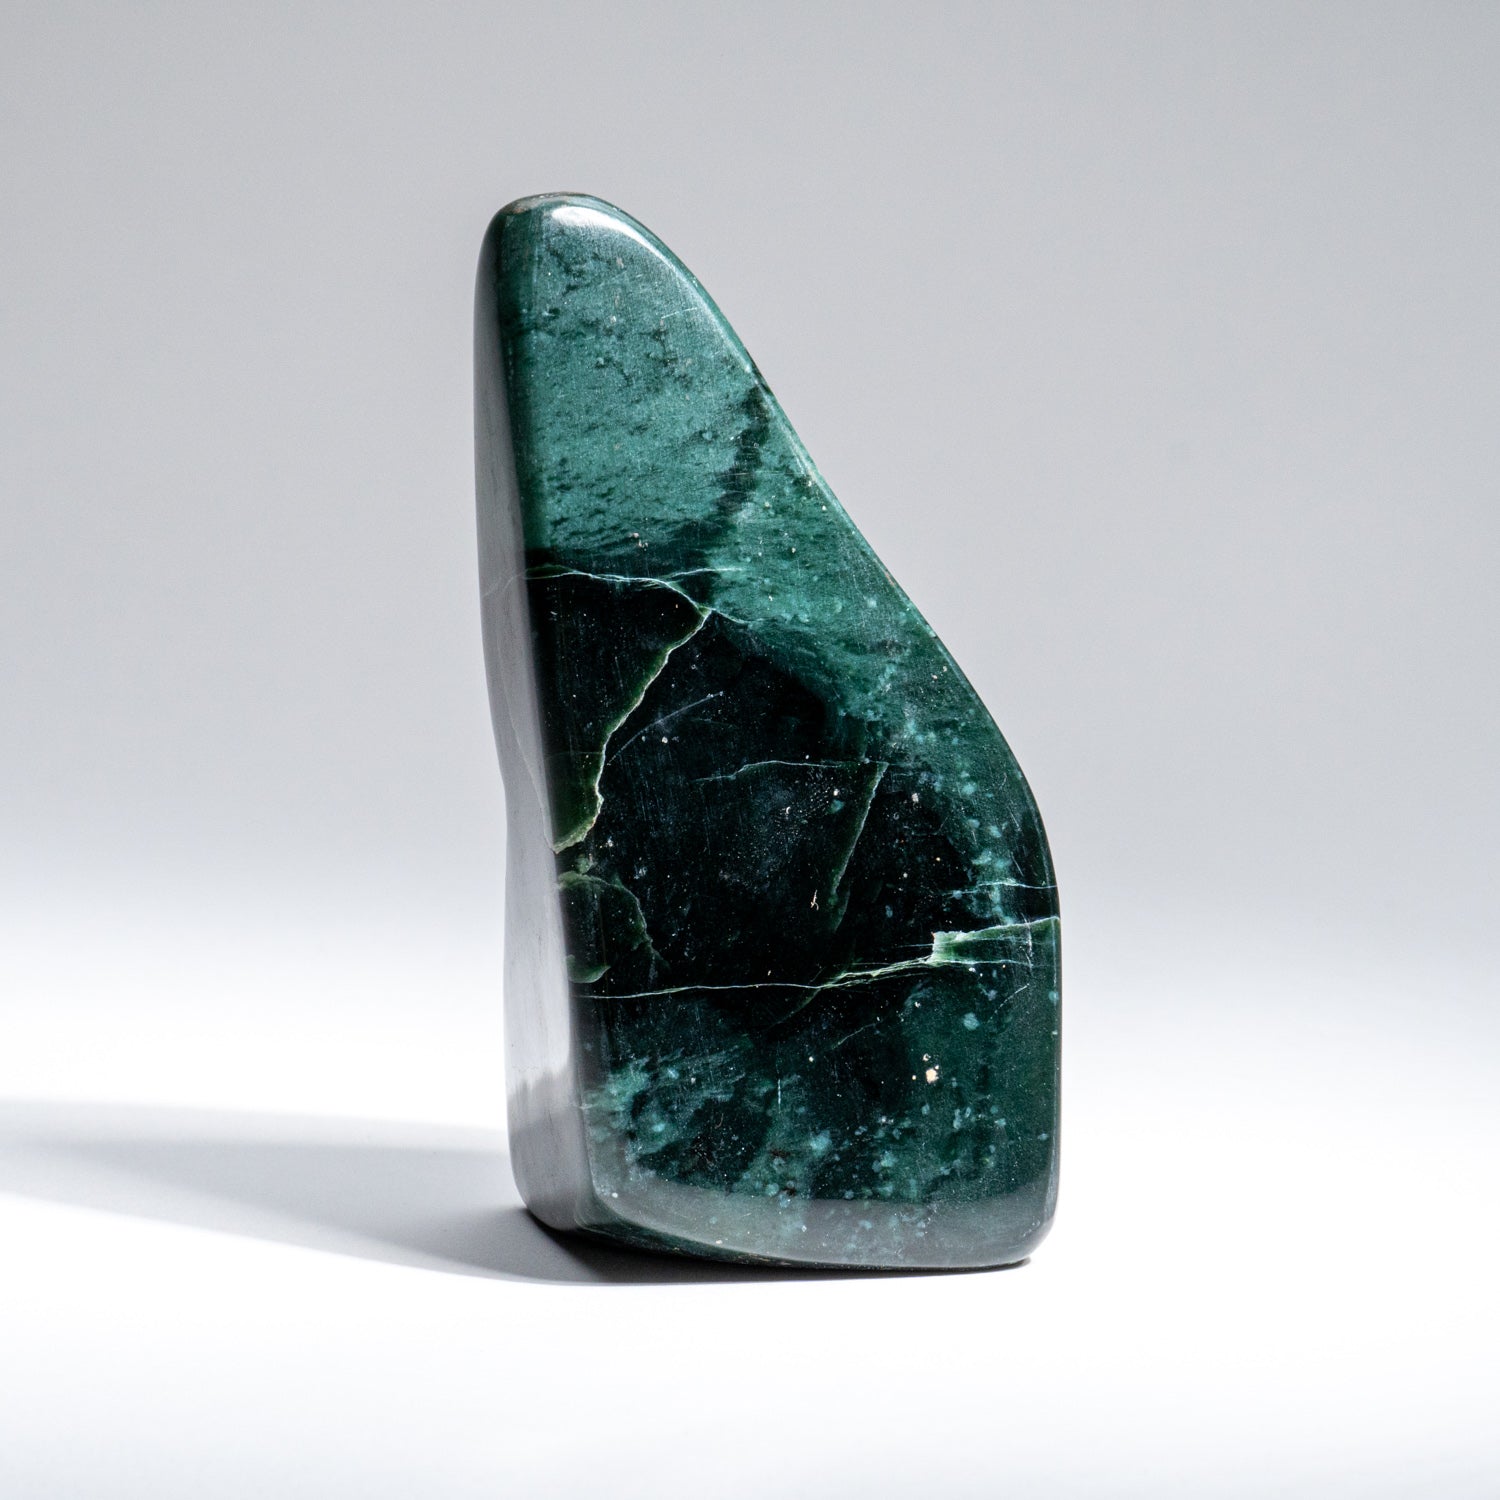 Polished Nephrite Jade Freeform from Pakistan (393.5 grams)